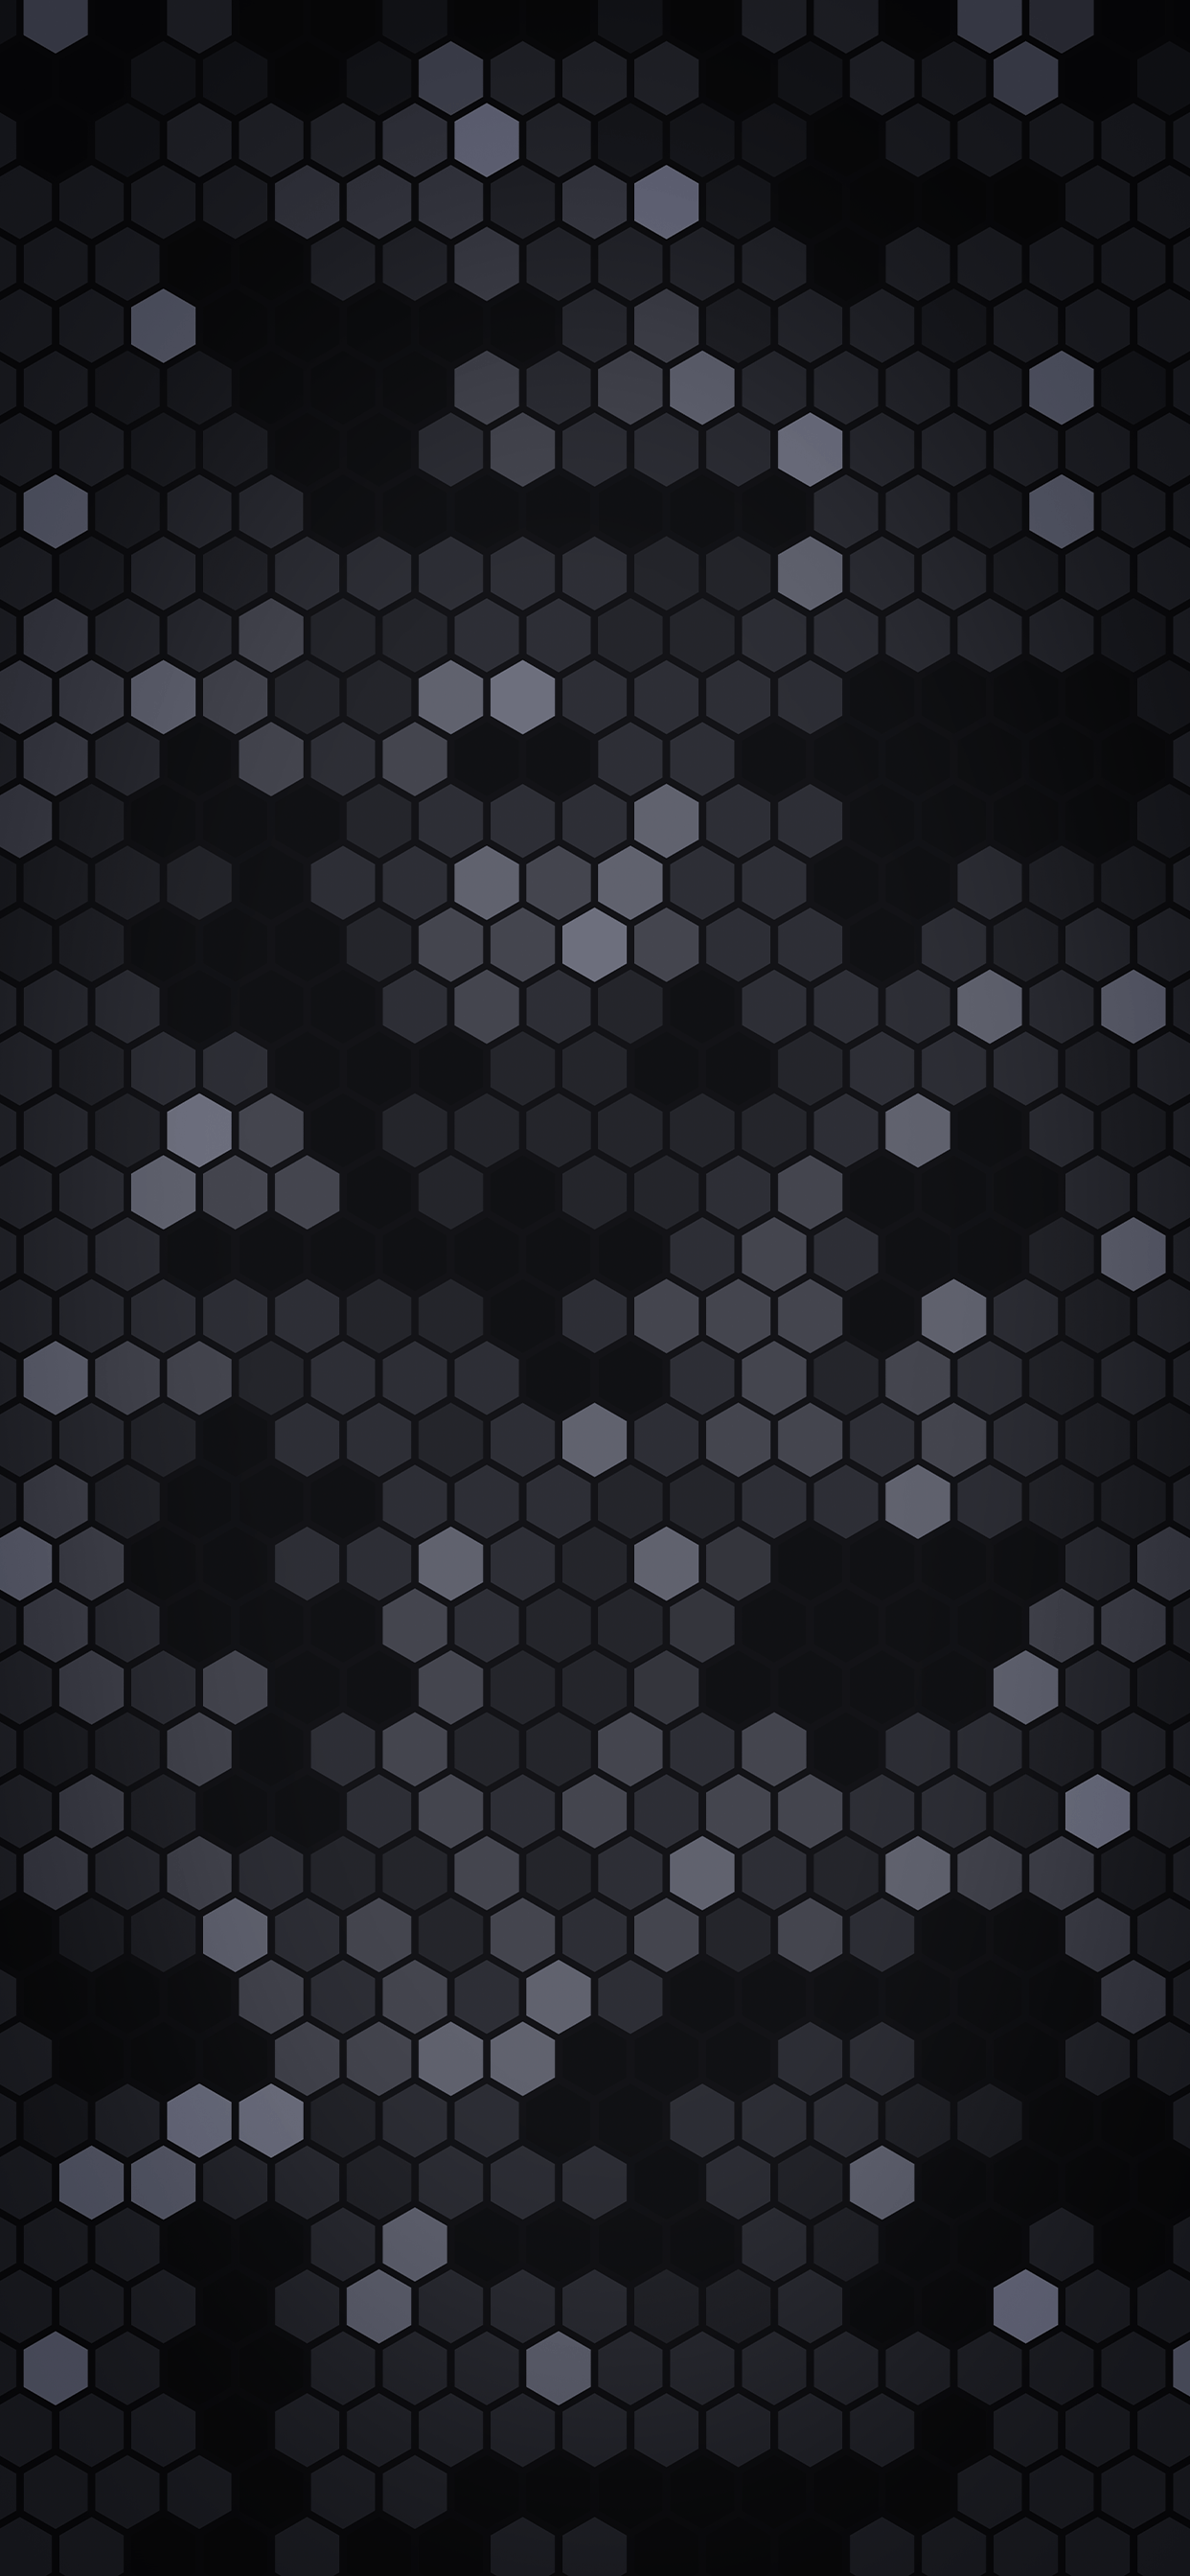 Dark iPhone Background, wallpaper collections at graciaviva.cat